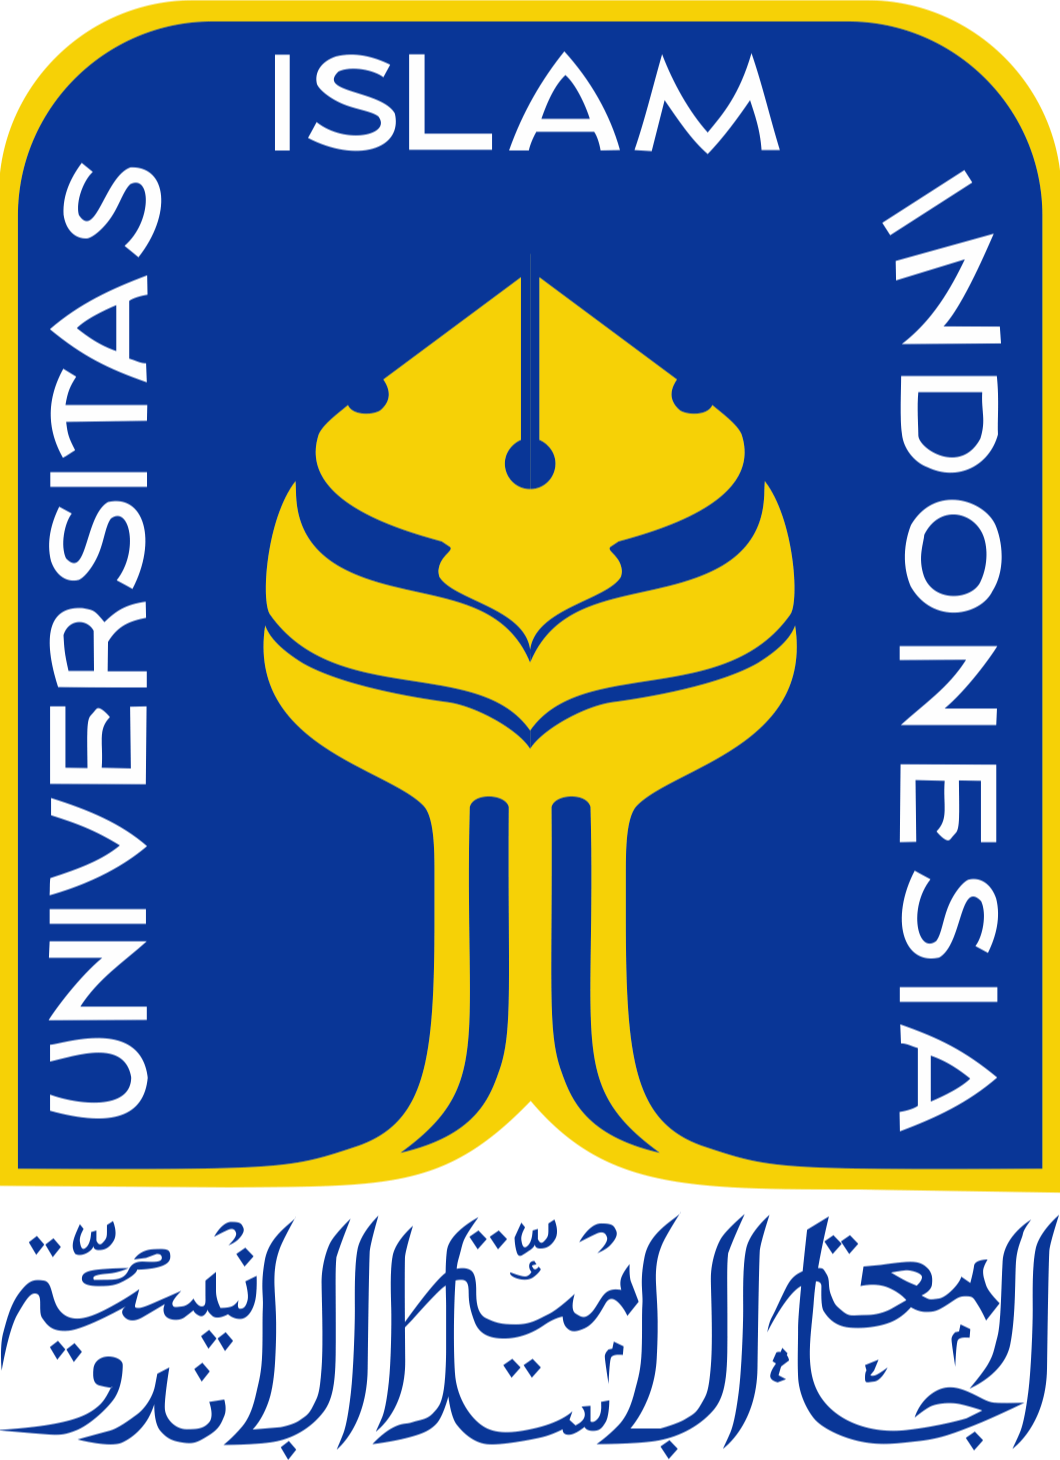 Logo UII